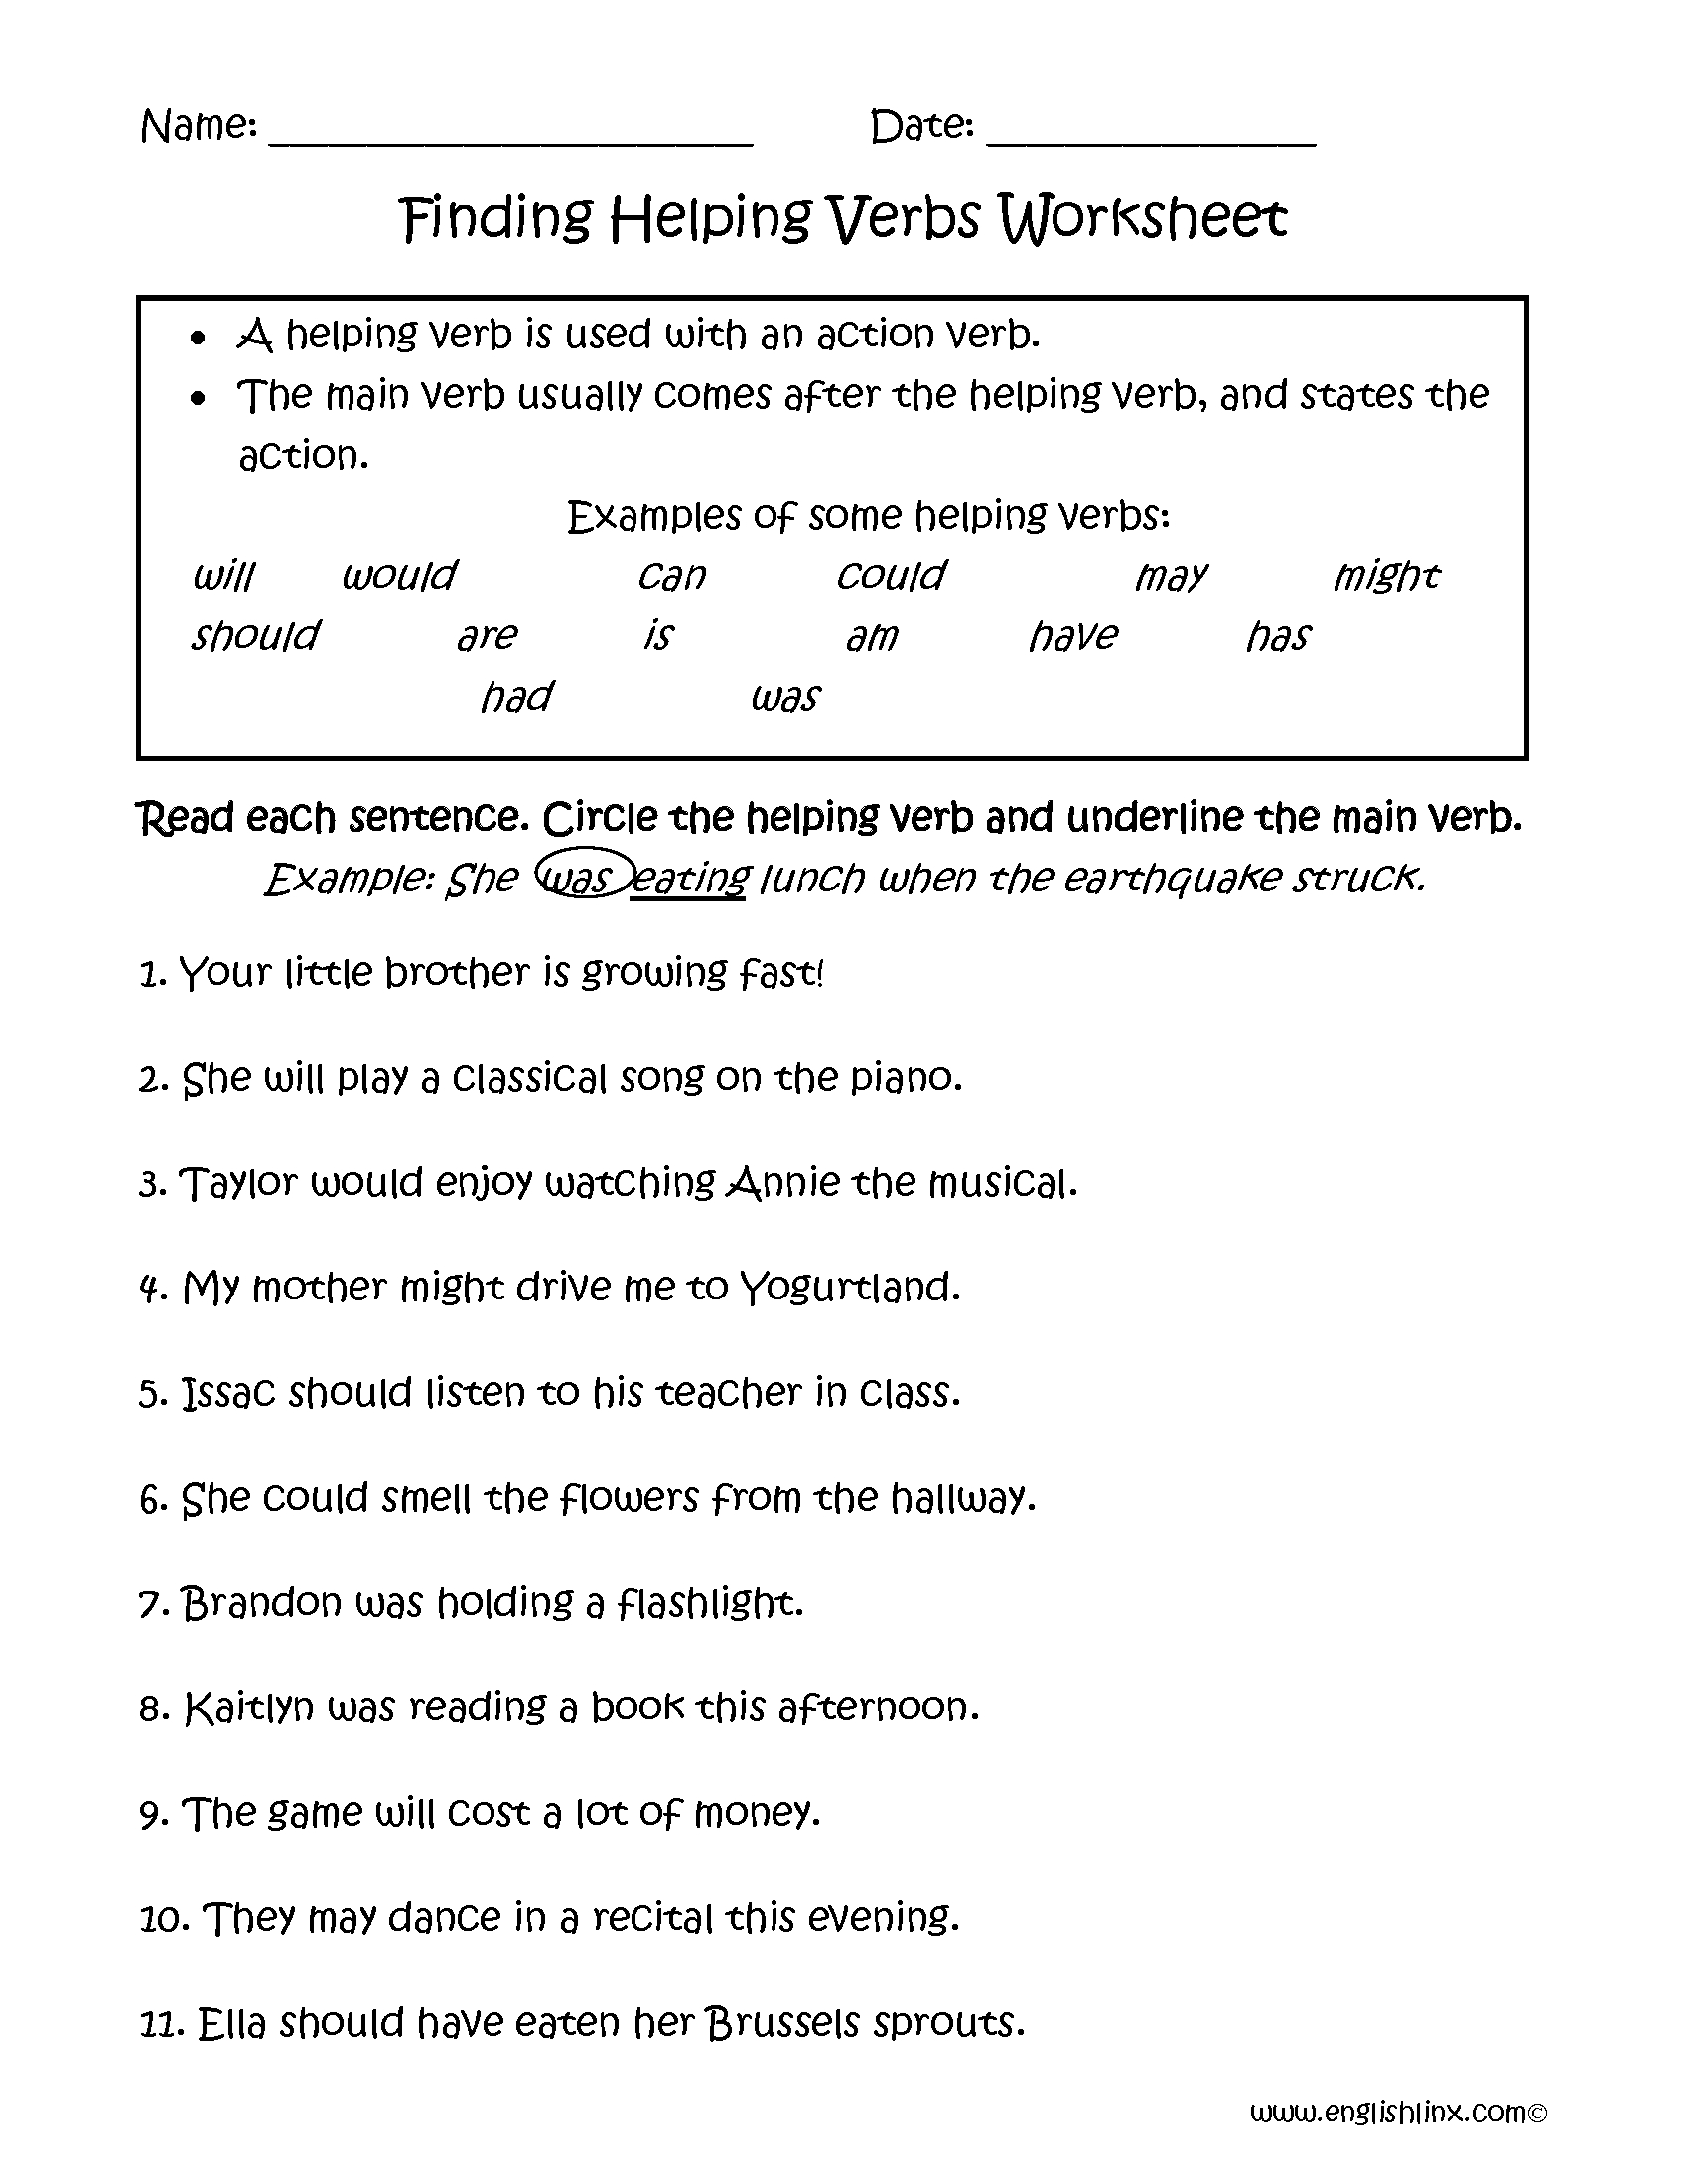 verbs-worksheets-for-grade-2-verbs-worksheet-verb-to-be-worksheets